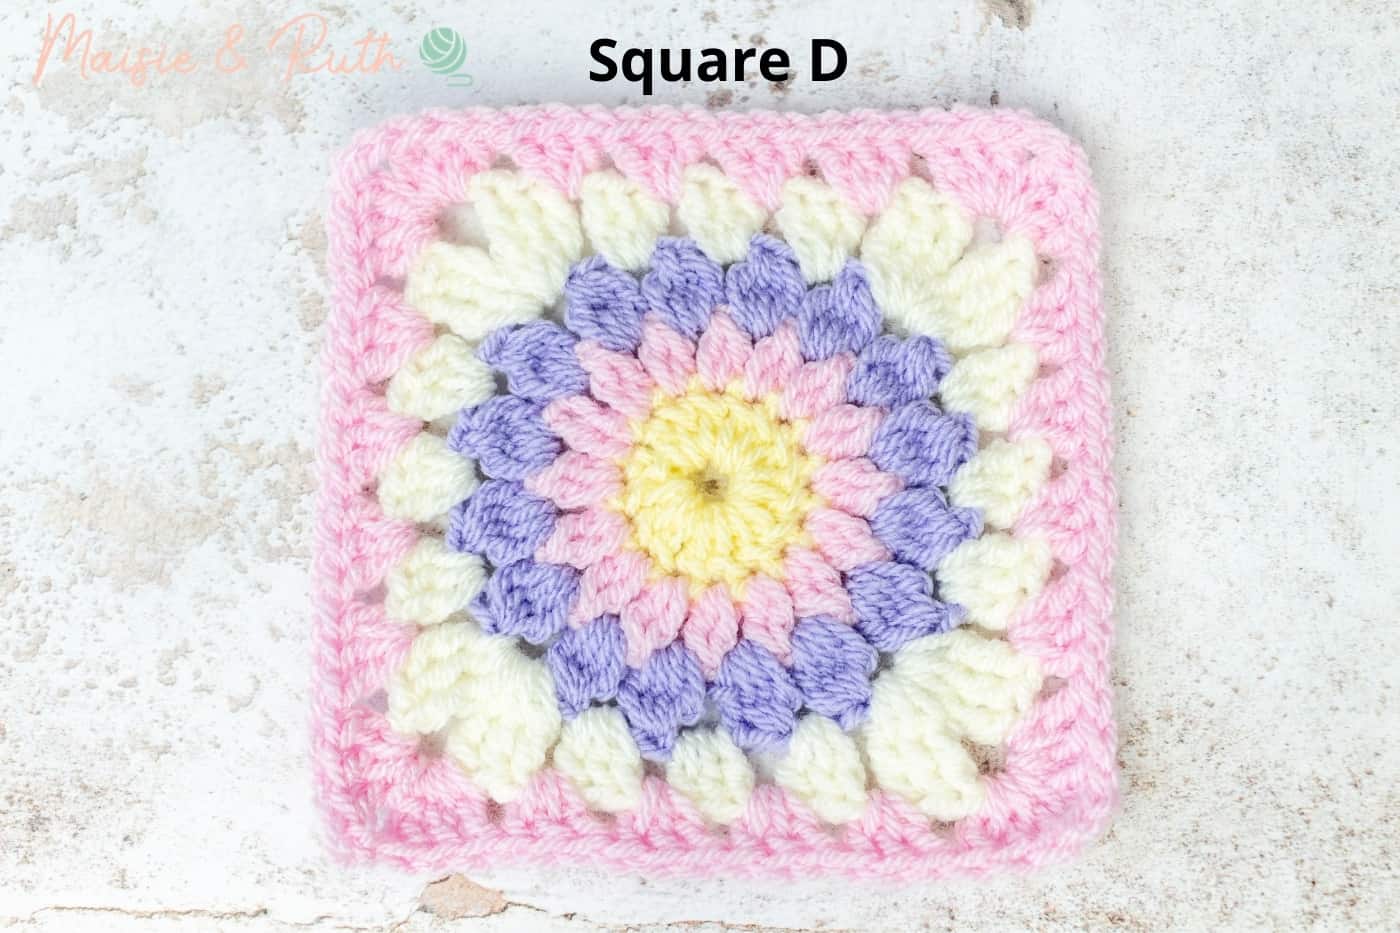 Square D Crochet Granny Square Blanket